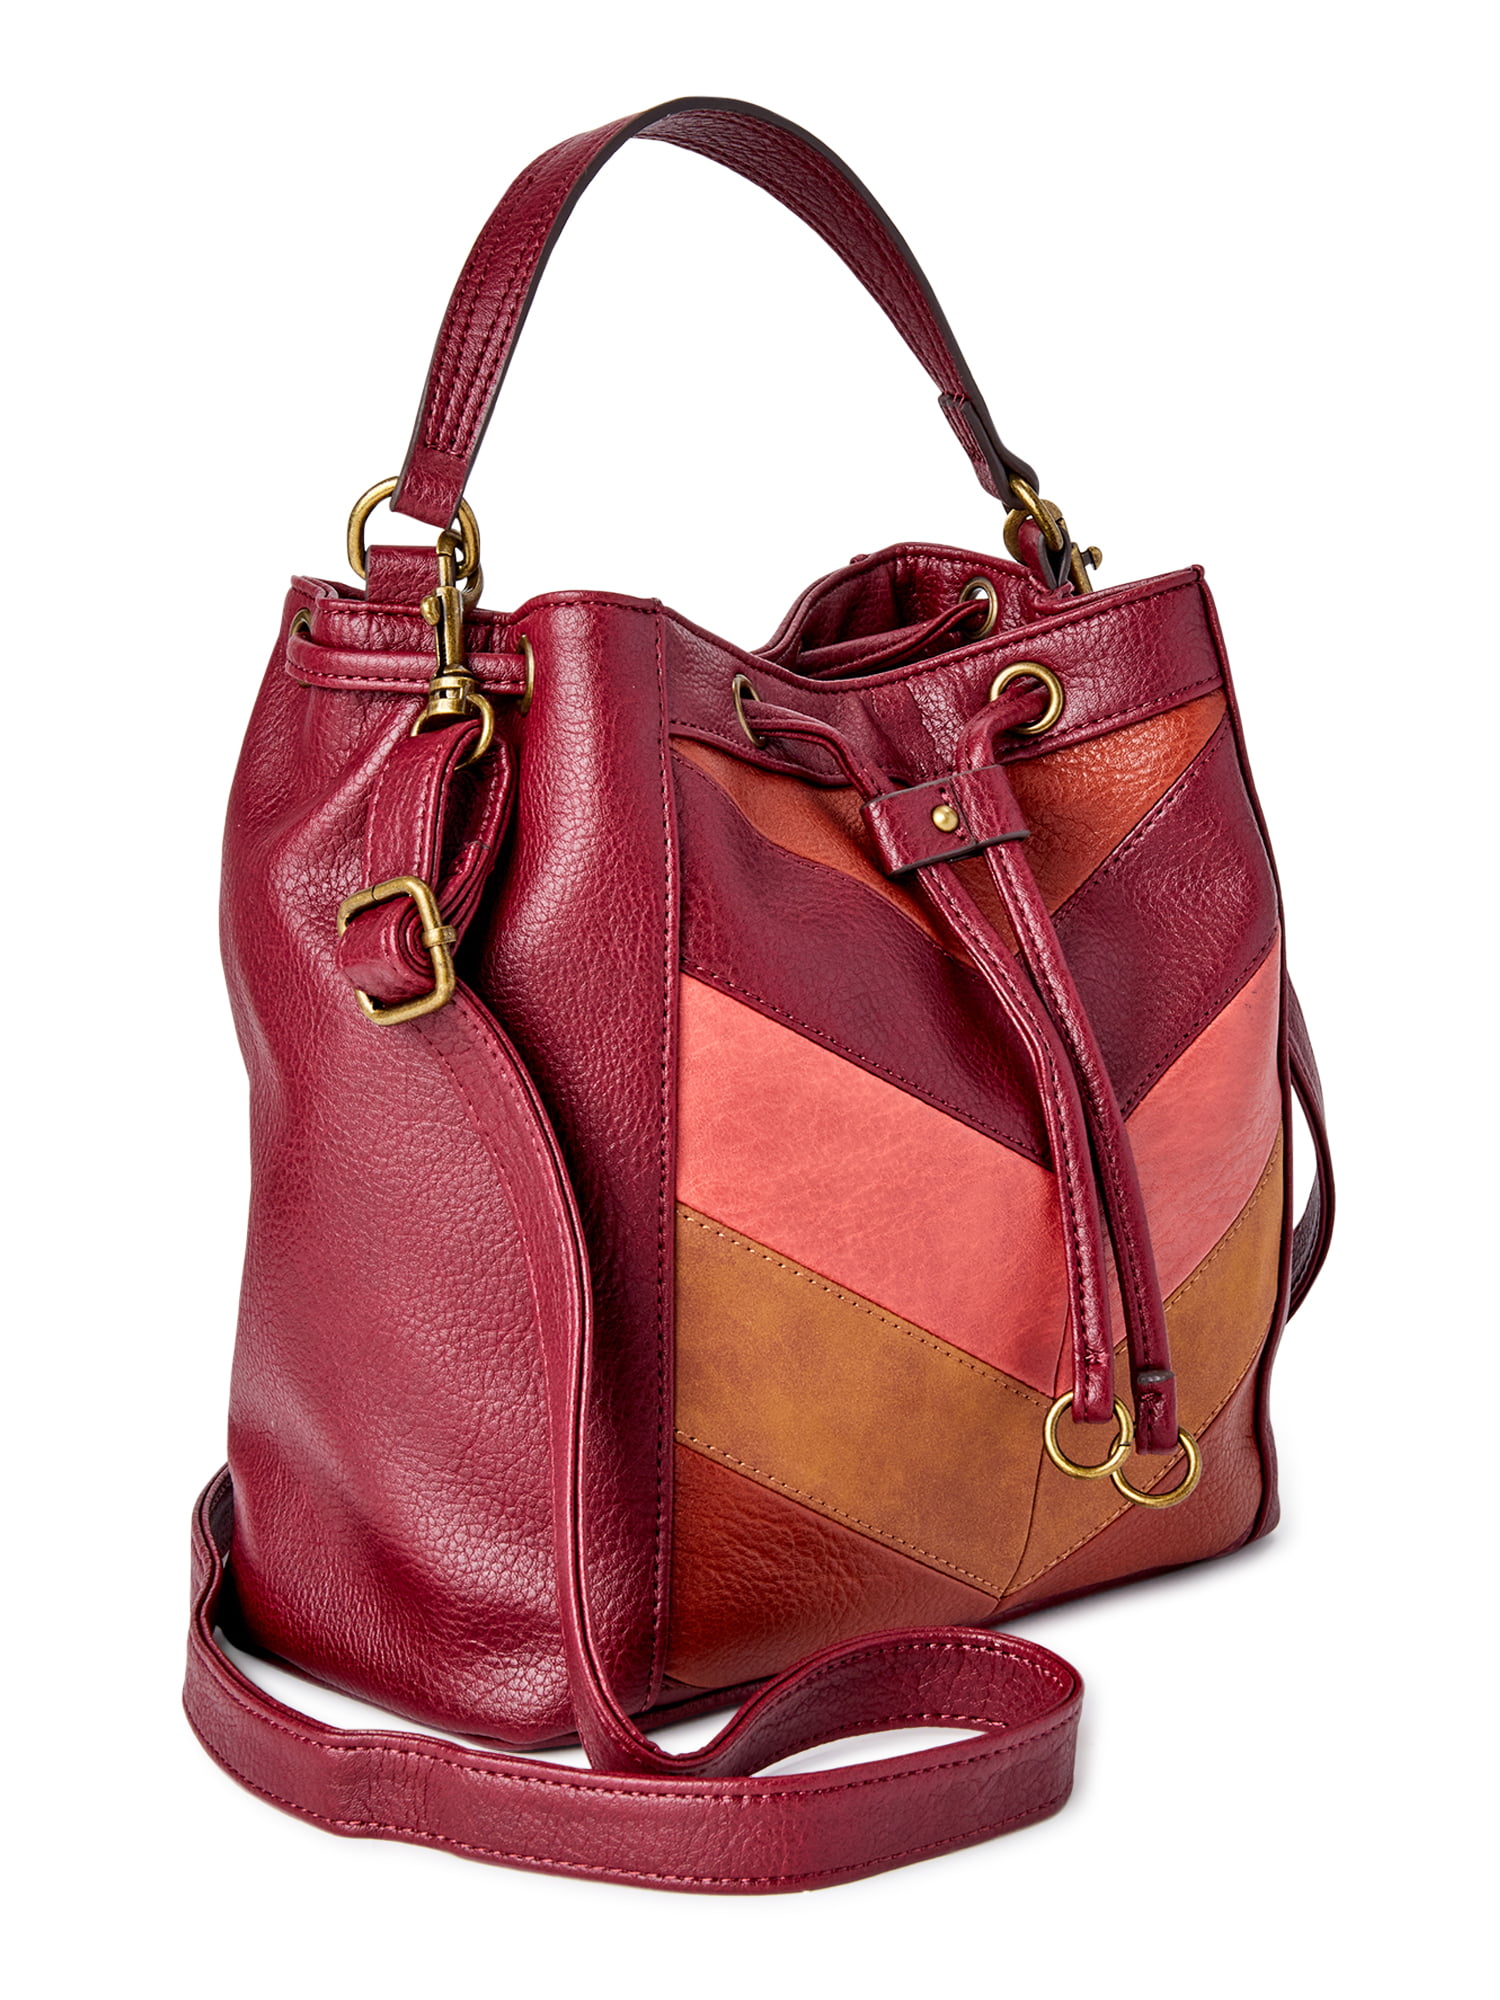 🇲🇾 DESINCE Women Handbag Tote Bag Beg Perempuan Sling Bag Bucket